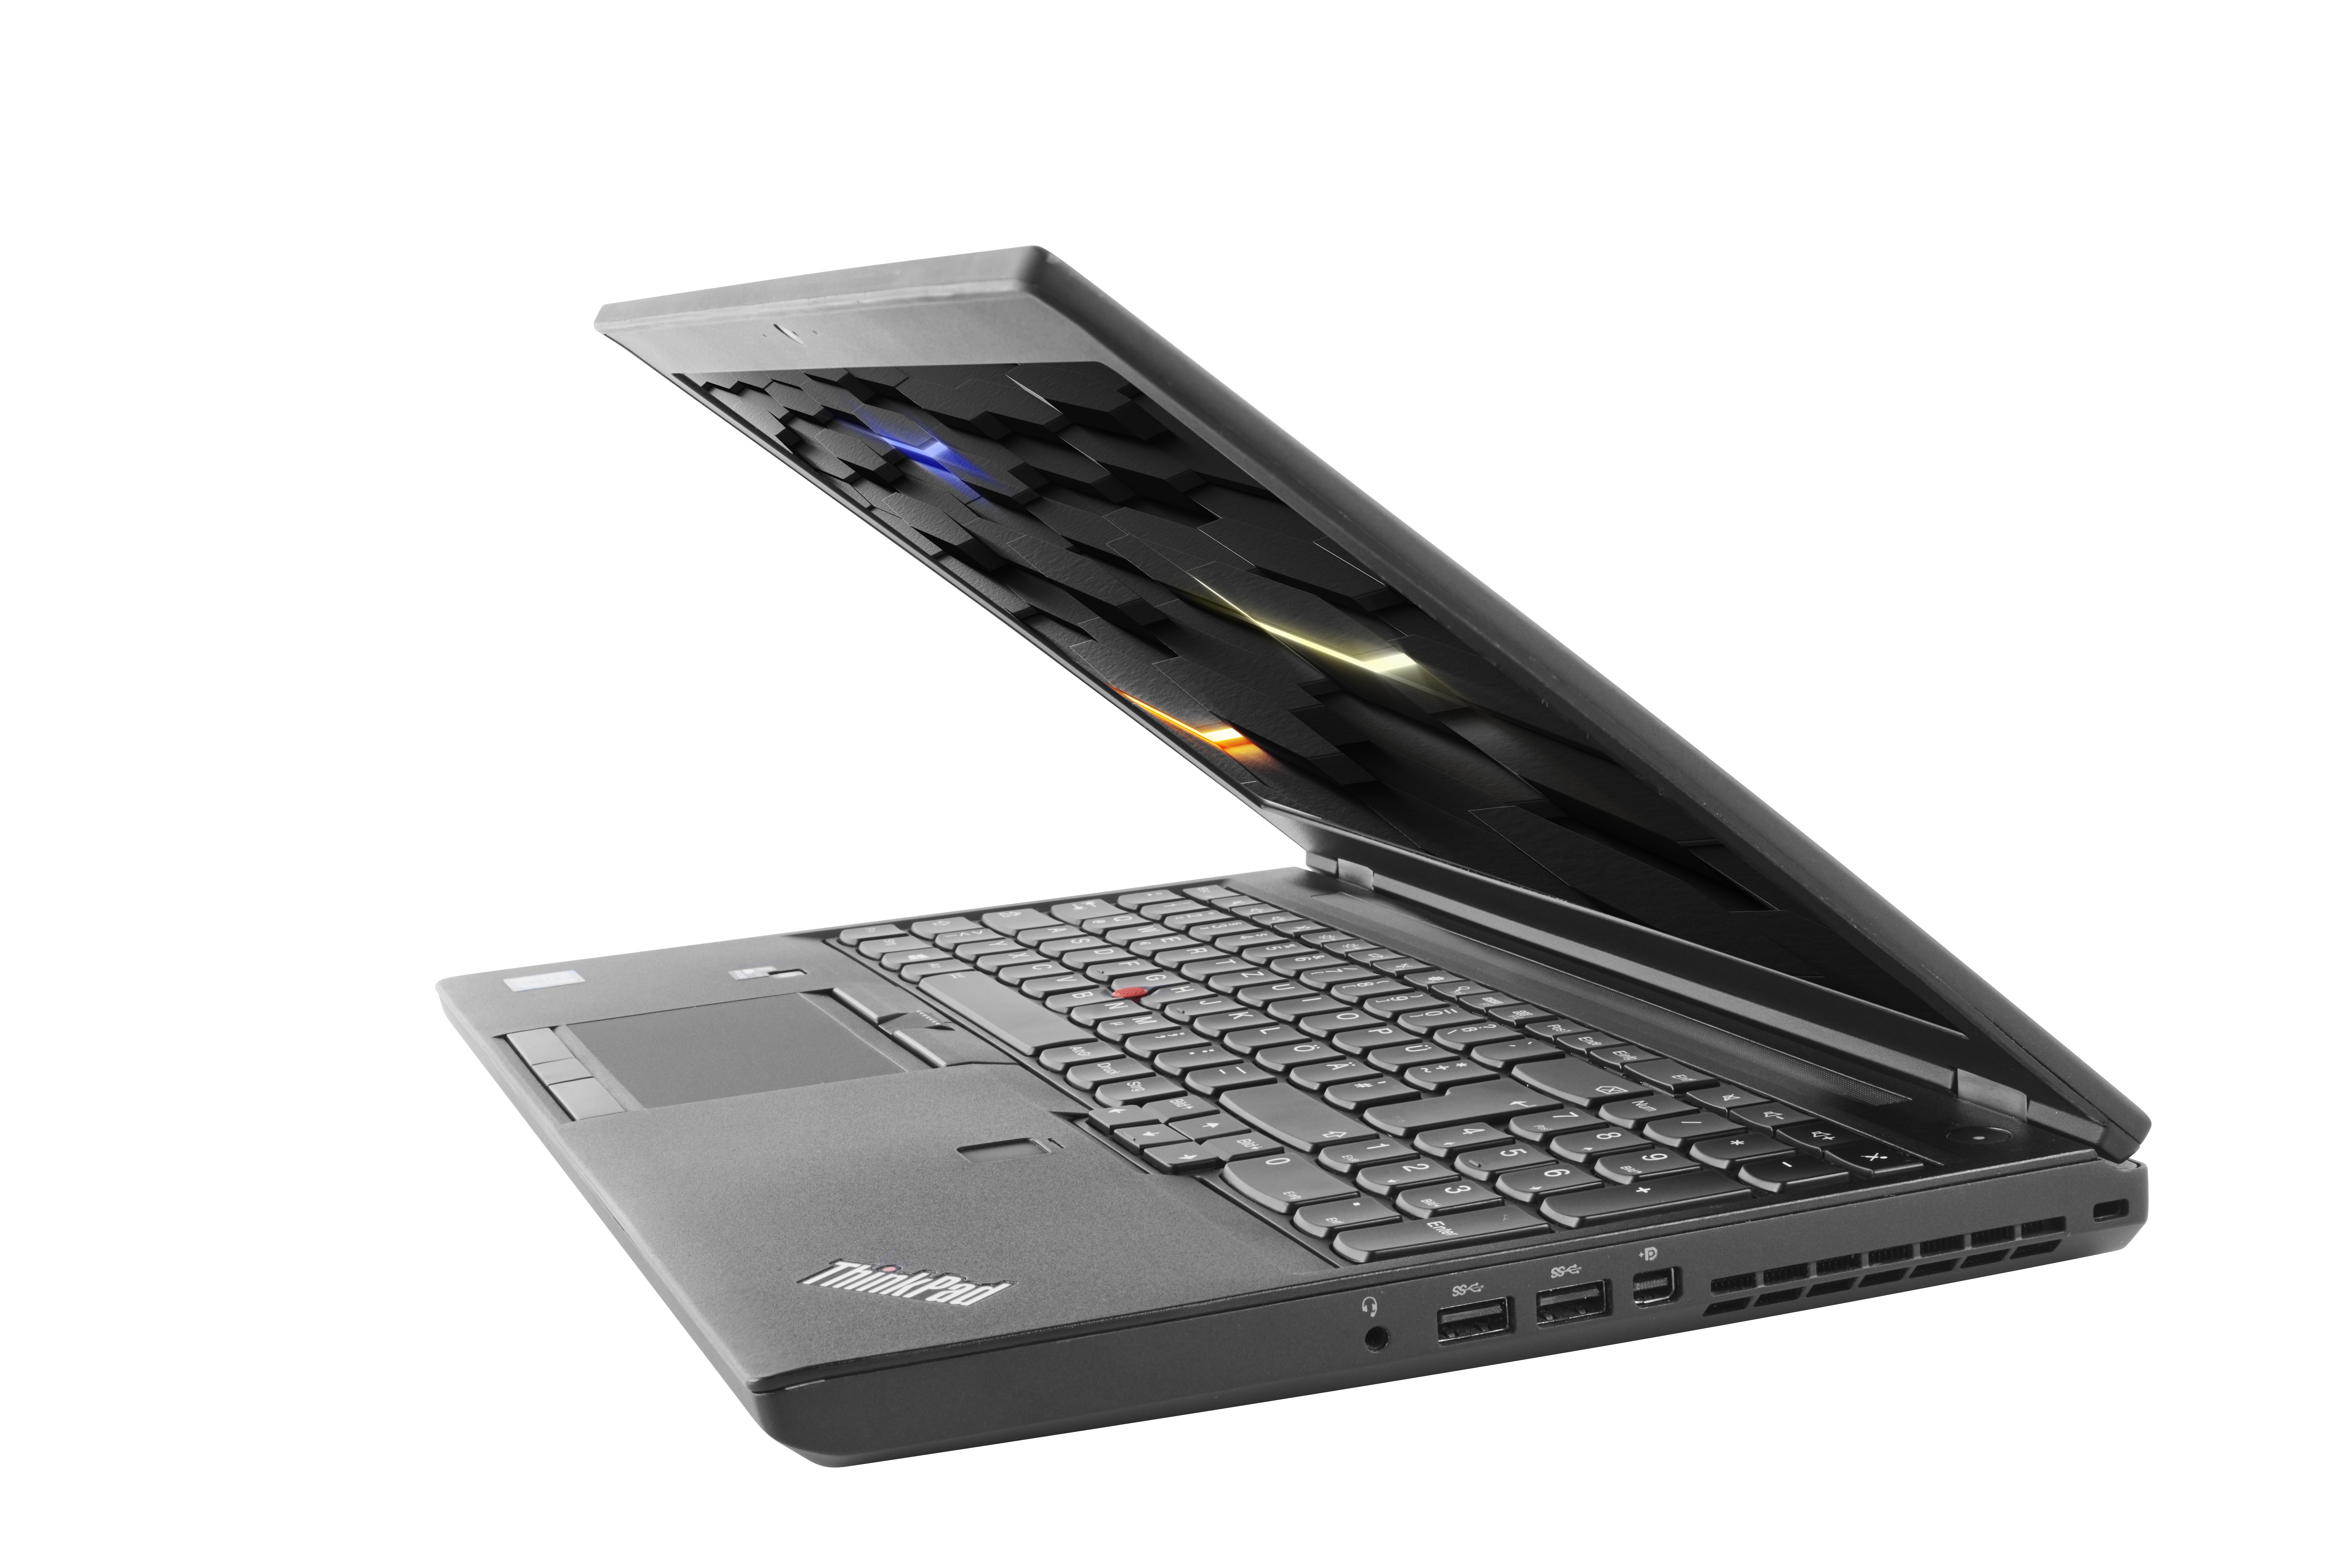 Lenovo ThinkPad P50, i7, 15.6" Full-HD IPS, 64GB, 1TB HDD + 500GB SSD, Webcam, Windows 10 Pro